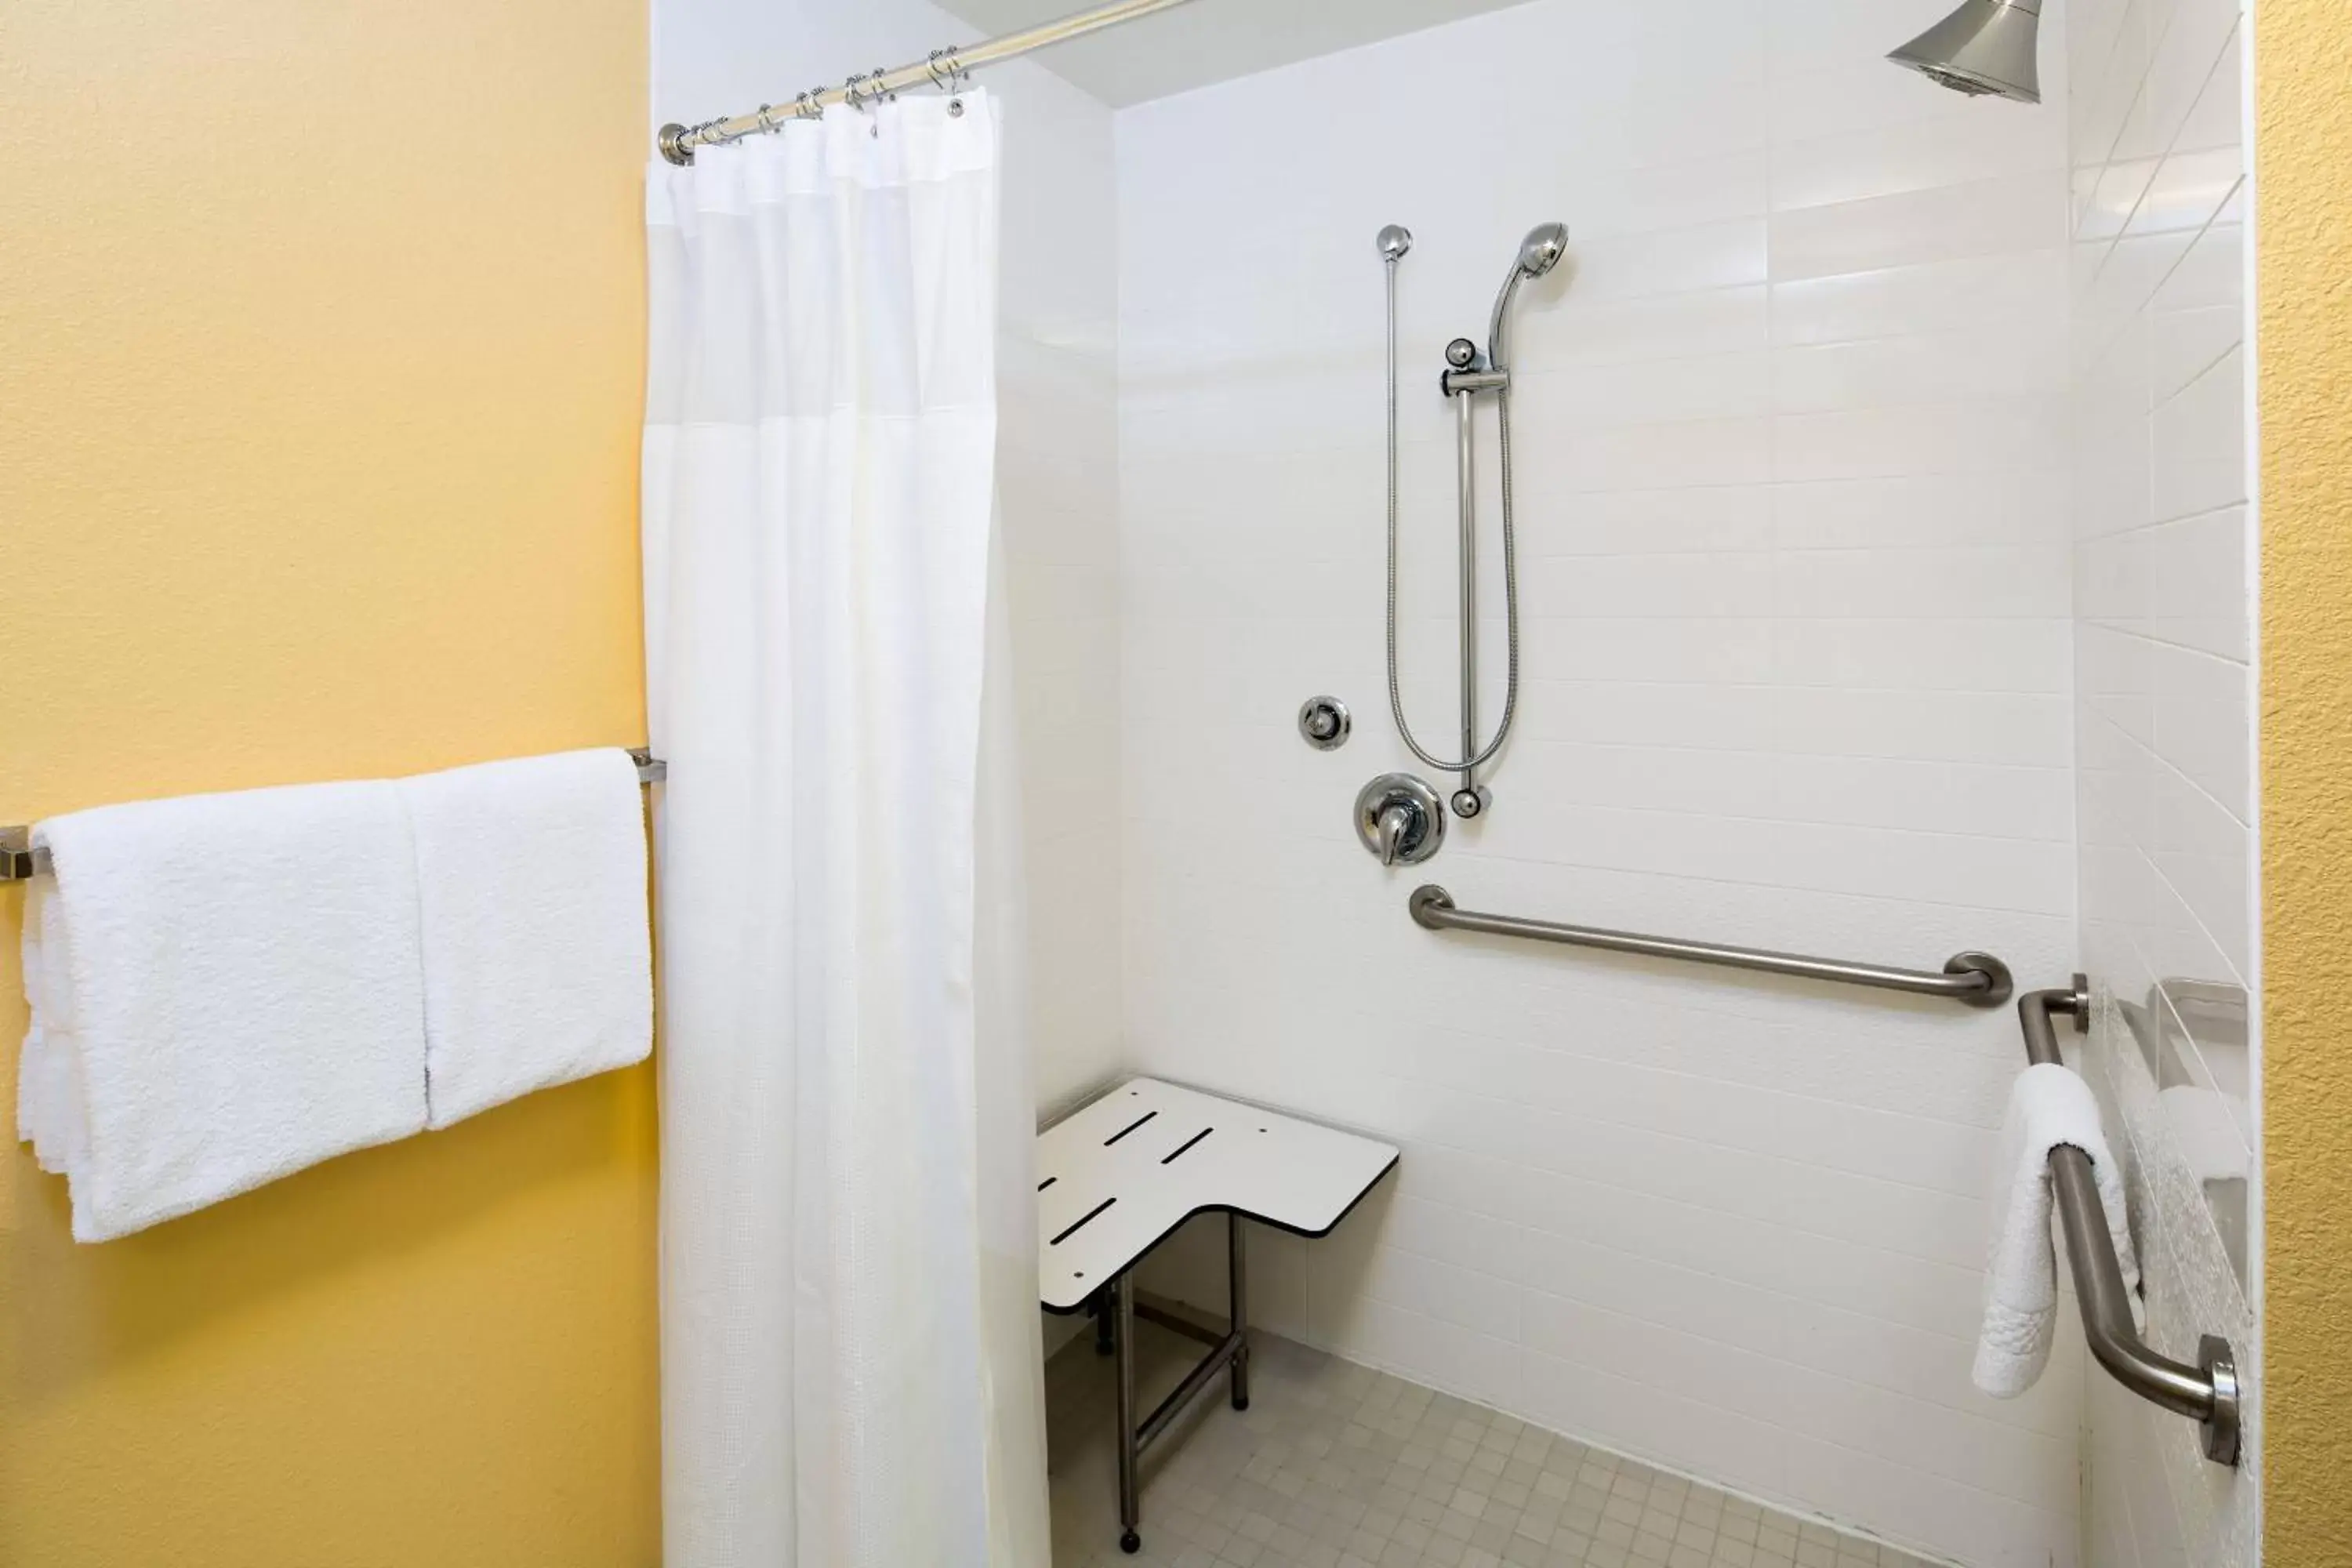 Bathroom in Fairfield Inn & Suites by Marriott San Antonio Airport/North Star Mall